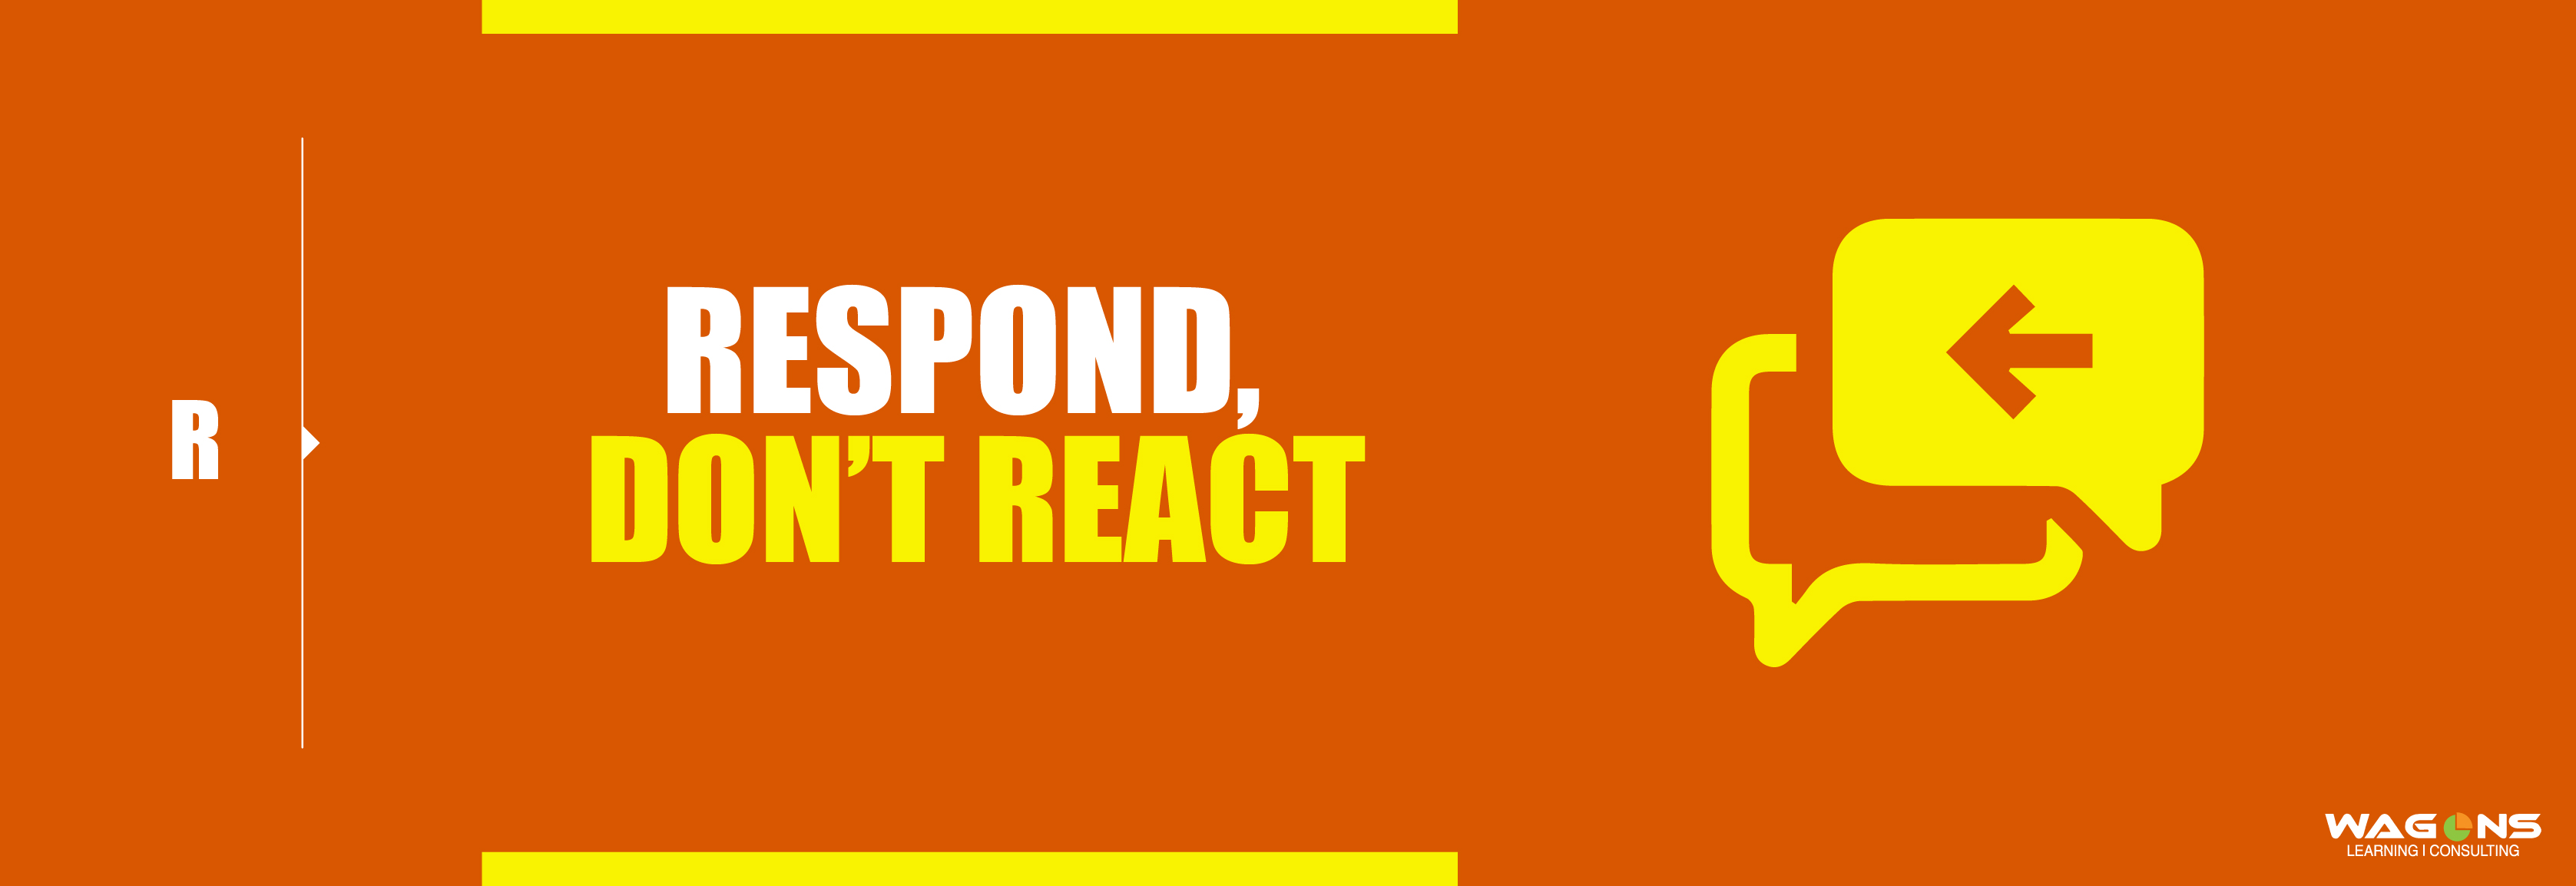 R – Respond, don’t react